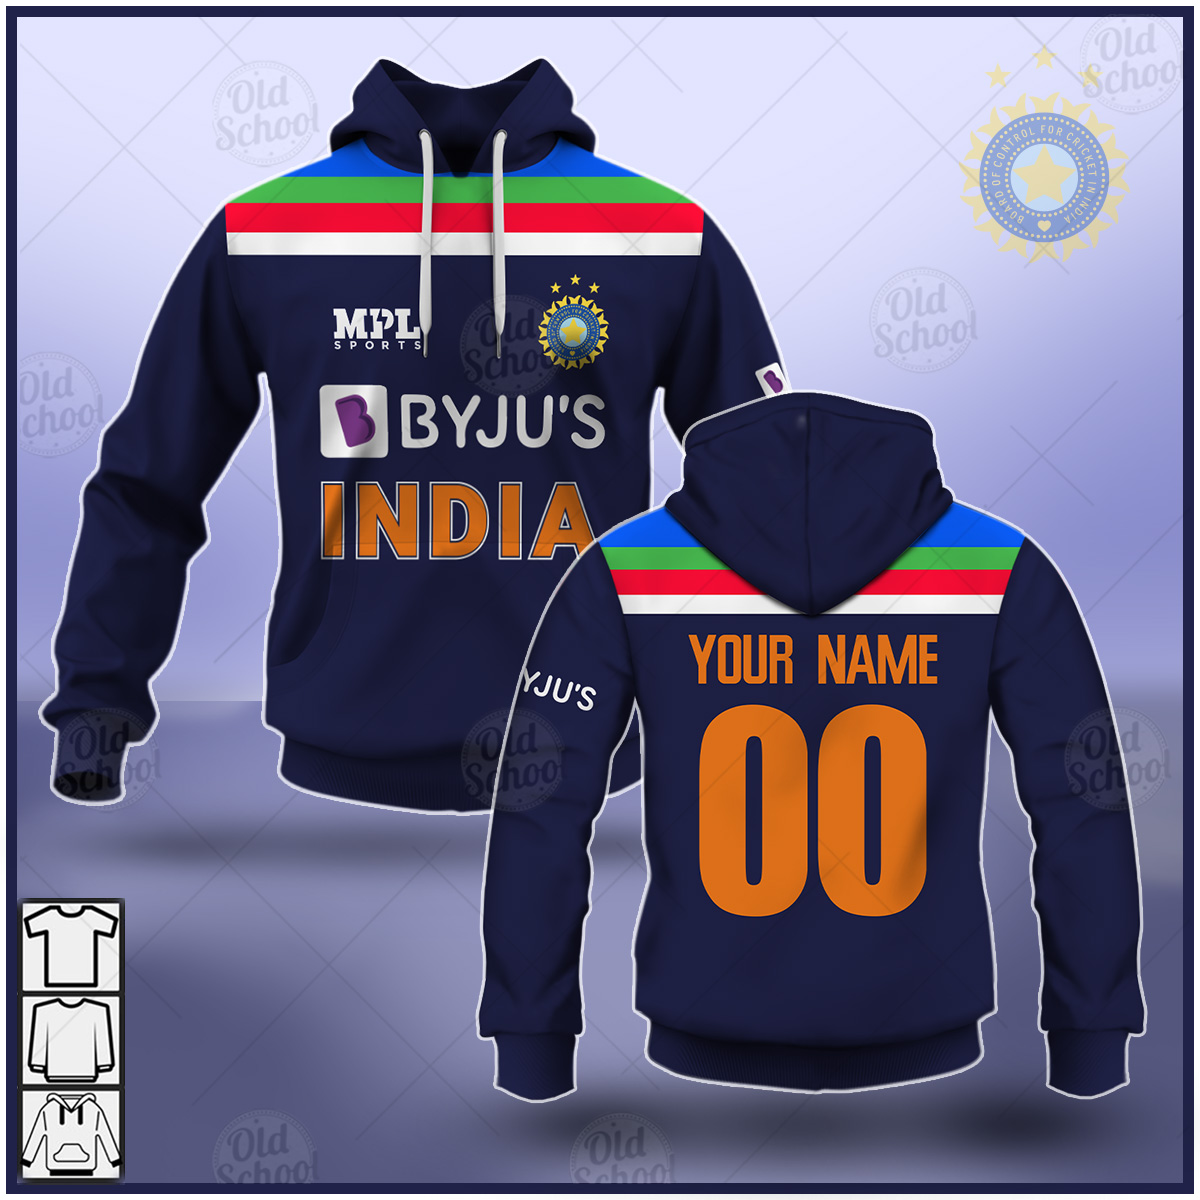 KD India Jersey Cricket Dri Fit Retro Theme T-Shirt Uniform Half Full Sleeve ODI Supporter Jersey 20-21 